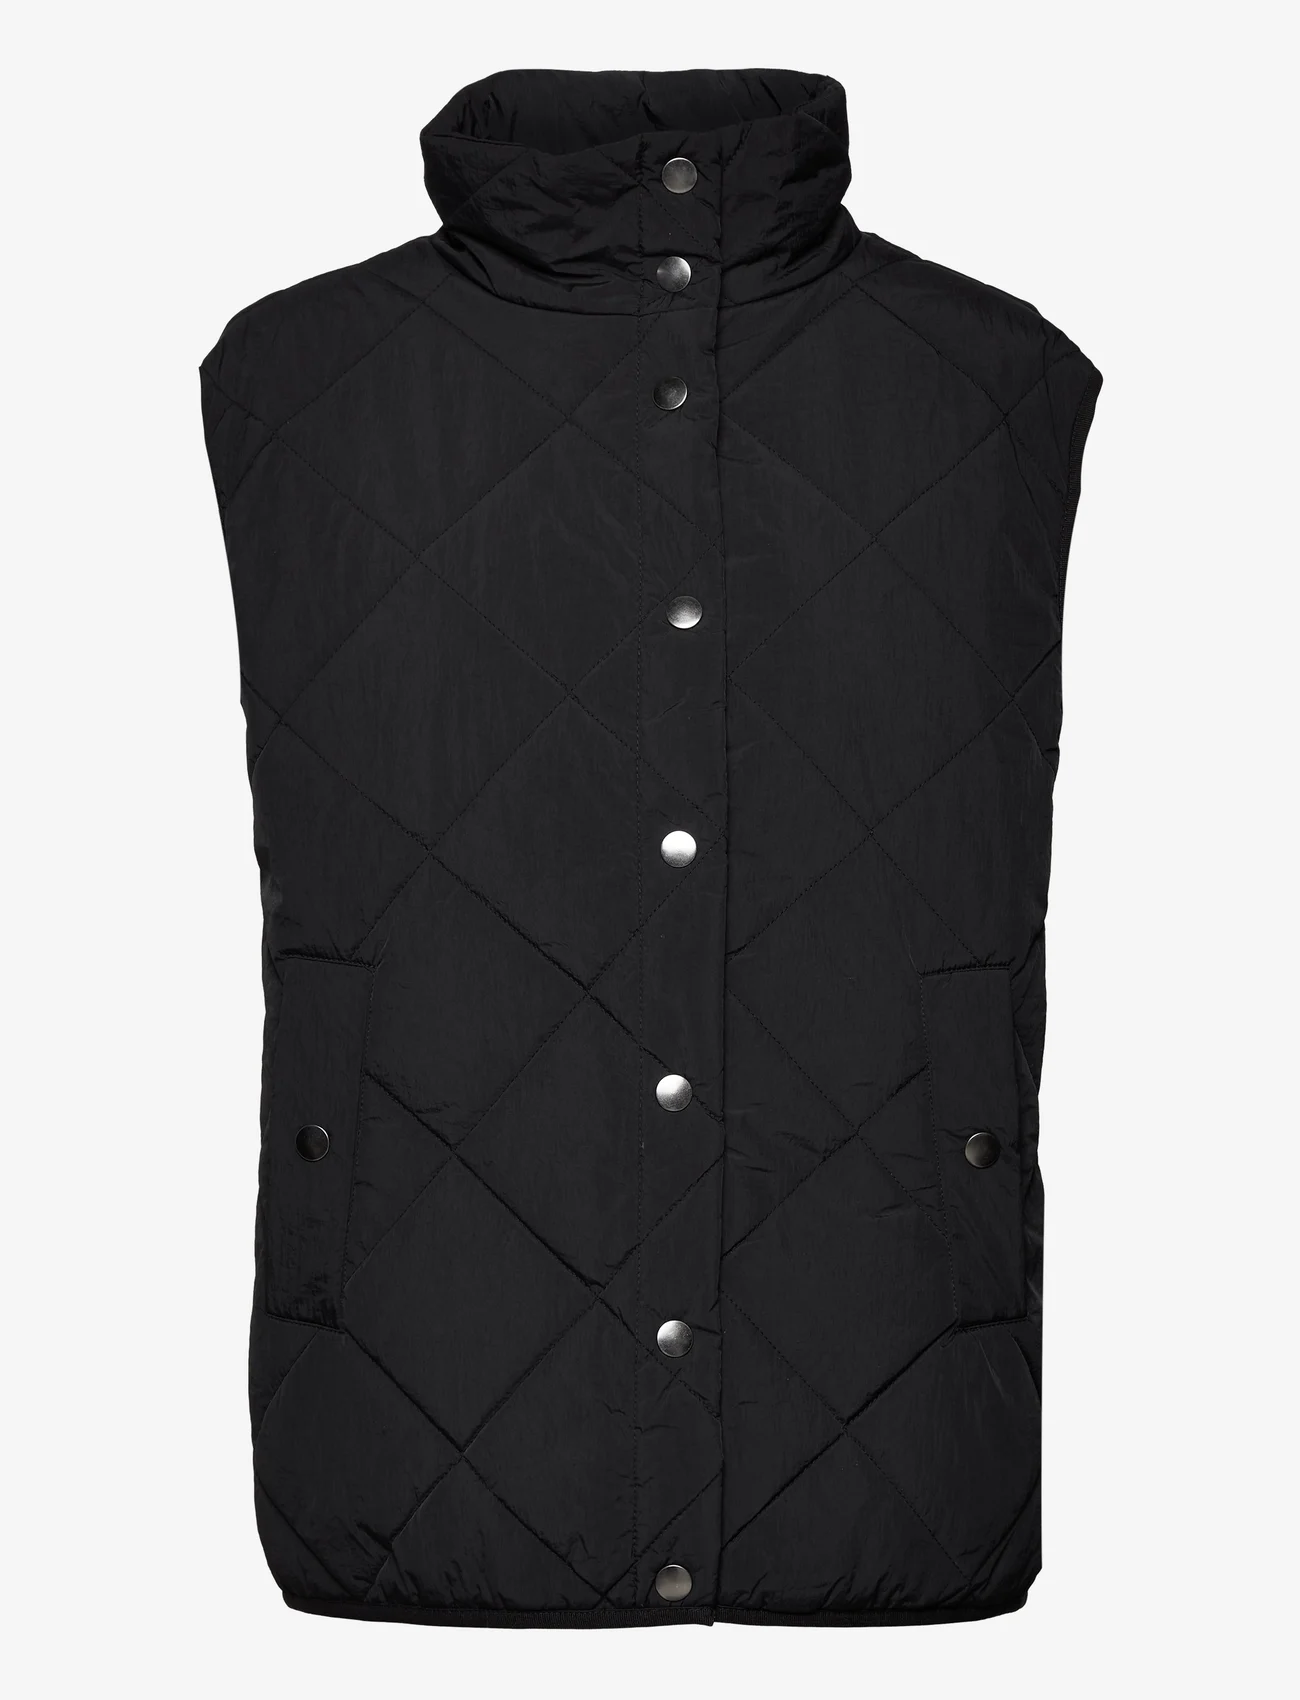 Kaffe - KAvia Waistcoat - quilted vests - black deep - 0